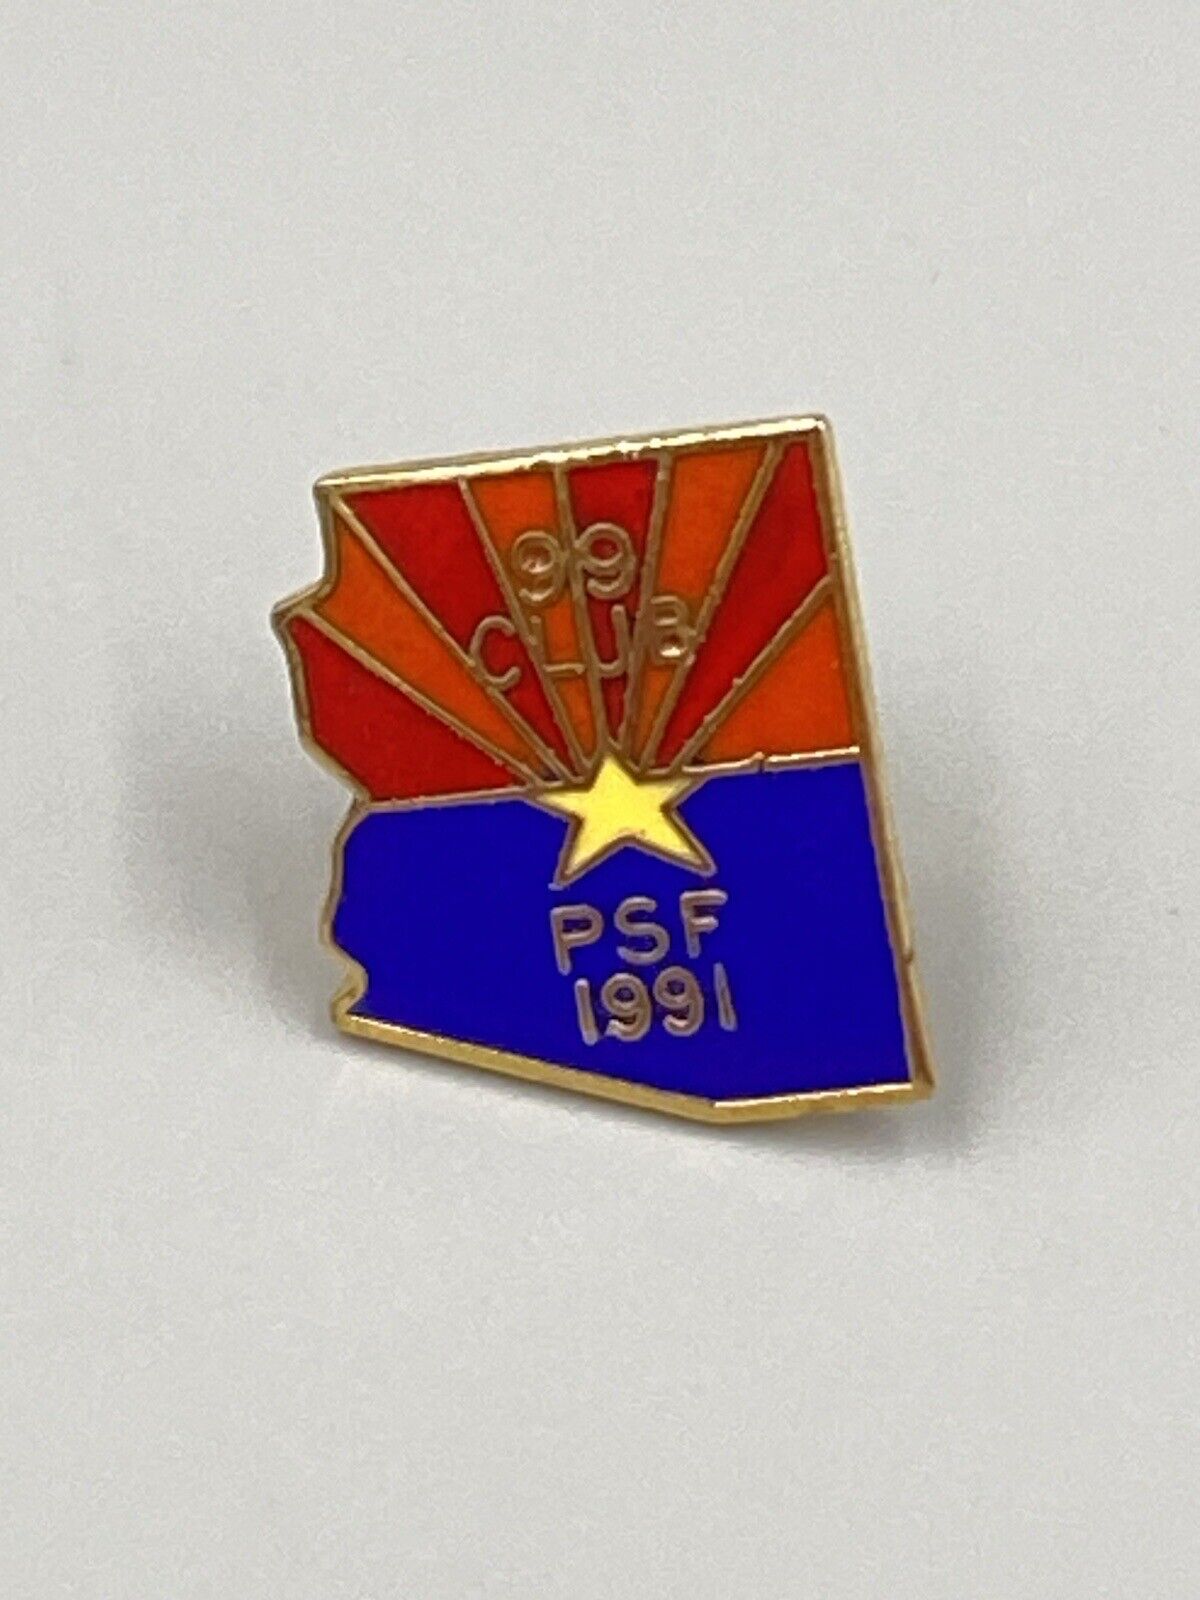 Vintage 99 Club PSF 1991 Lapel Hat Pin